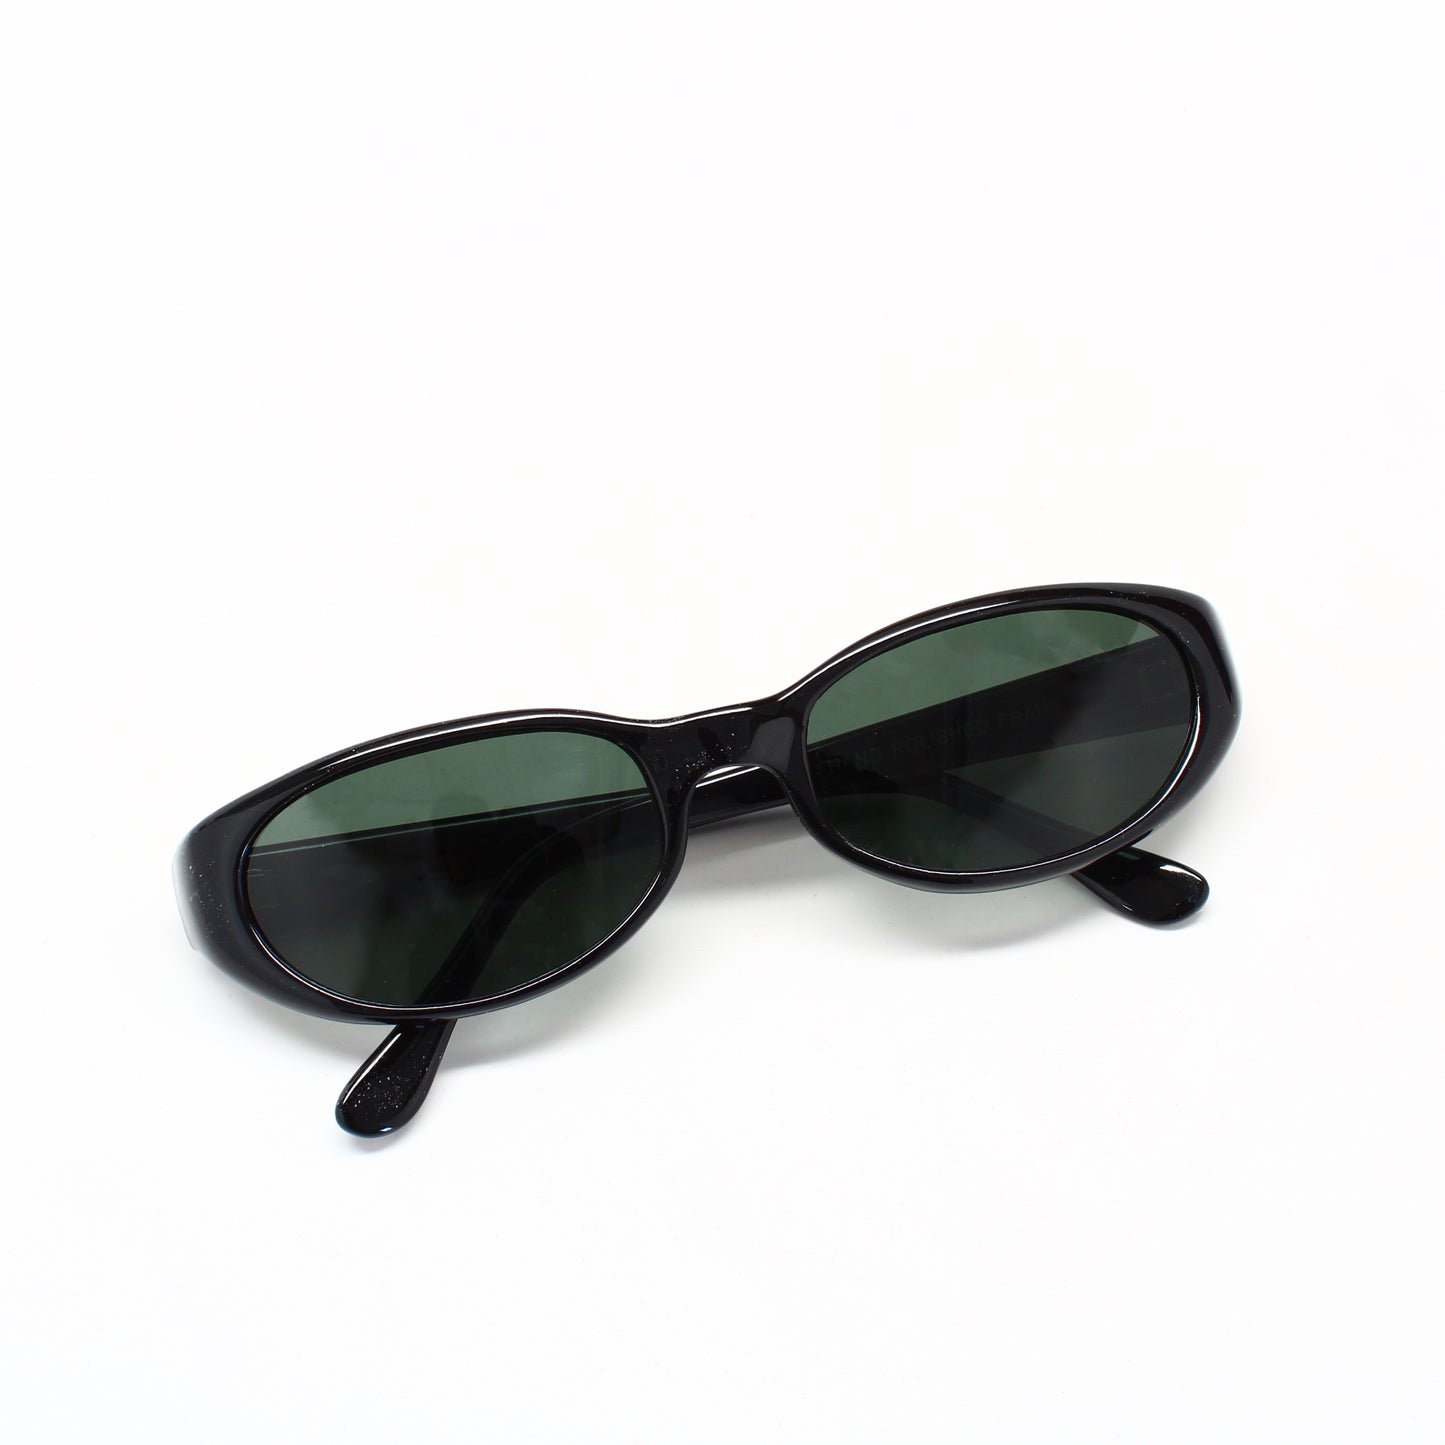 Vintage Standard Size 90s Mod Original Jane Oval Sunglasses - Dark Black